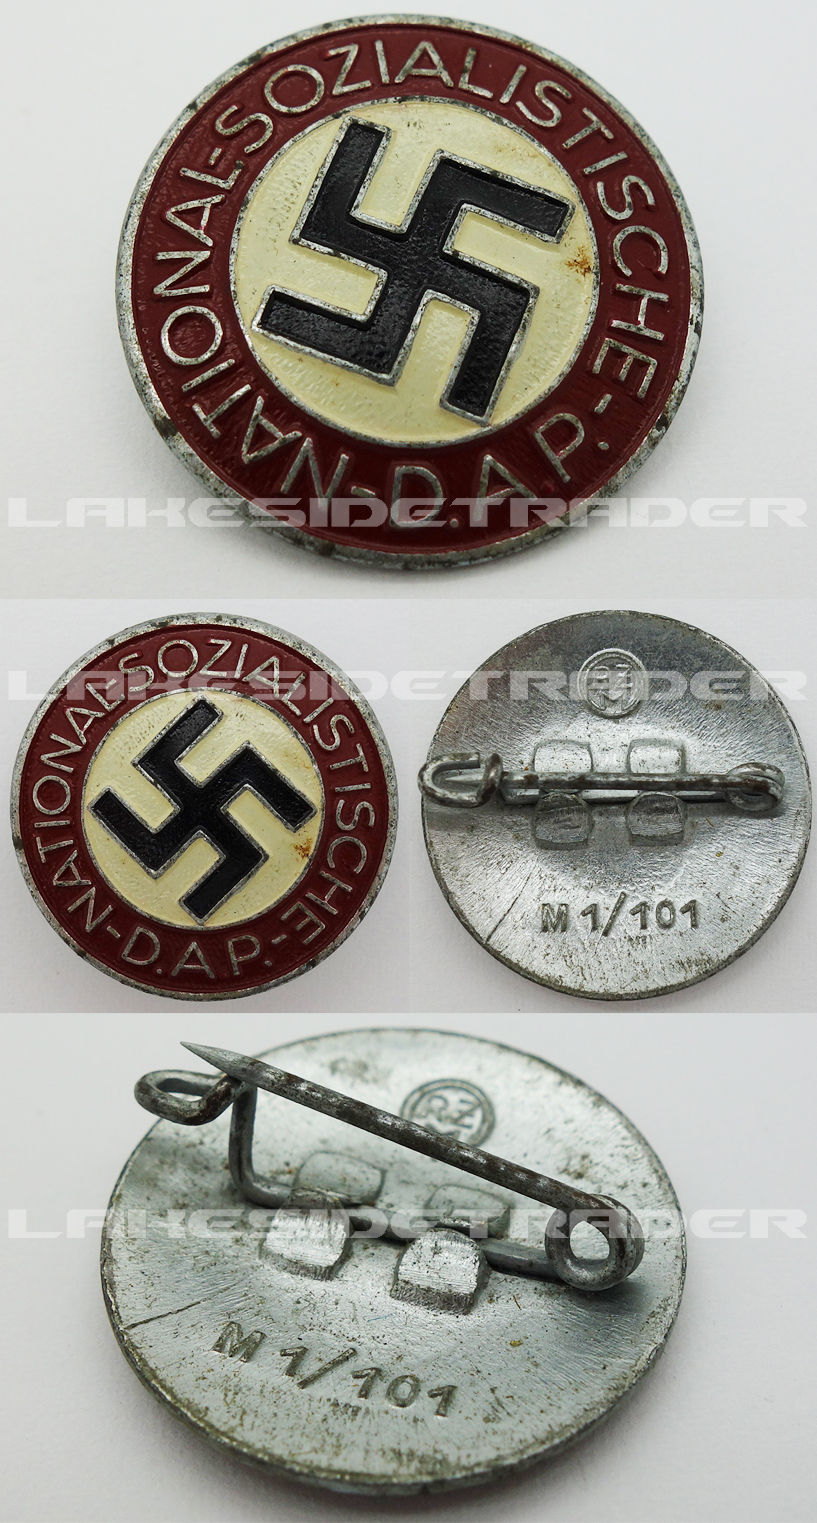 NSDAP Membership Pin by RZM M1/101